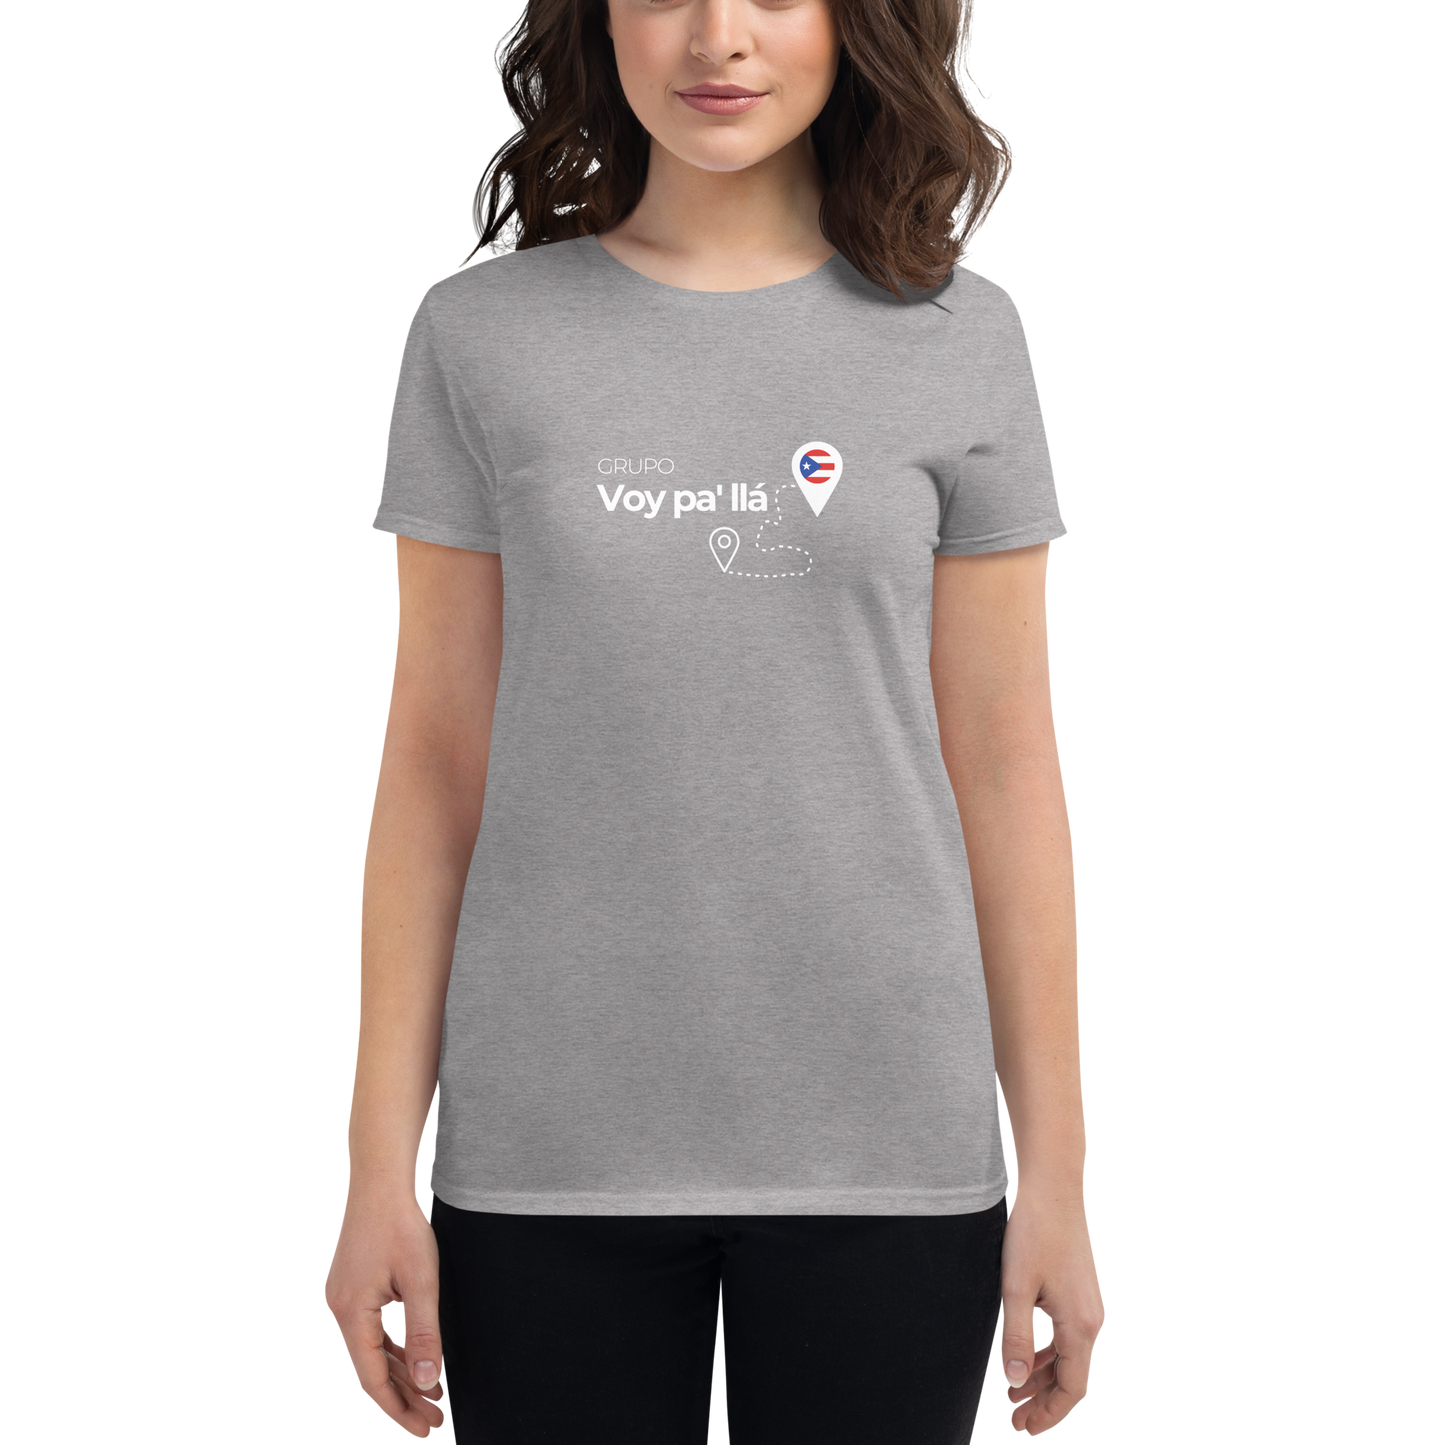 Camiseta de Mujer Grupo Voy pa' llá